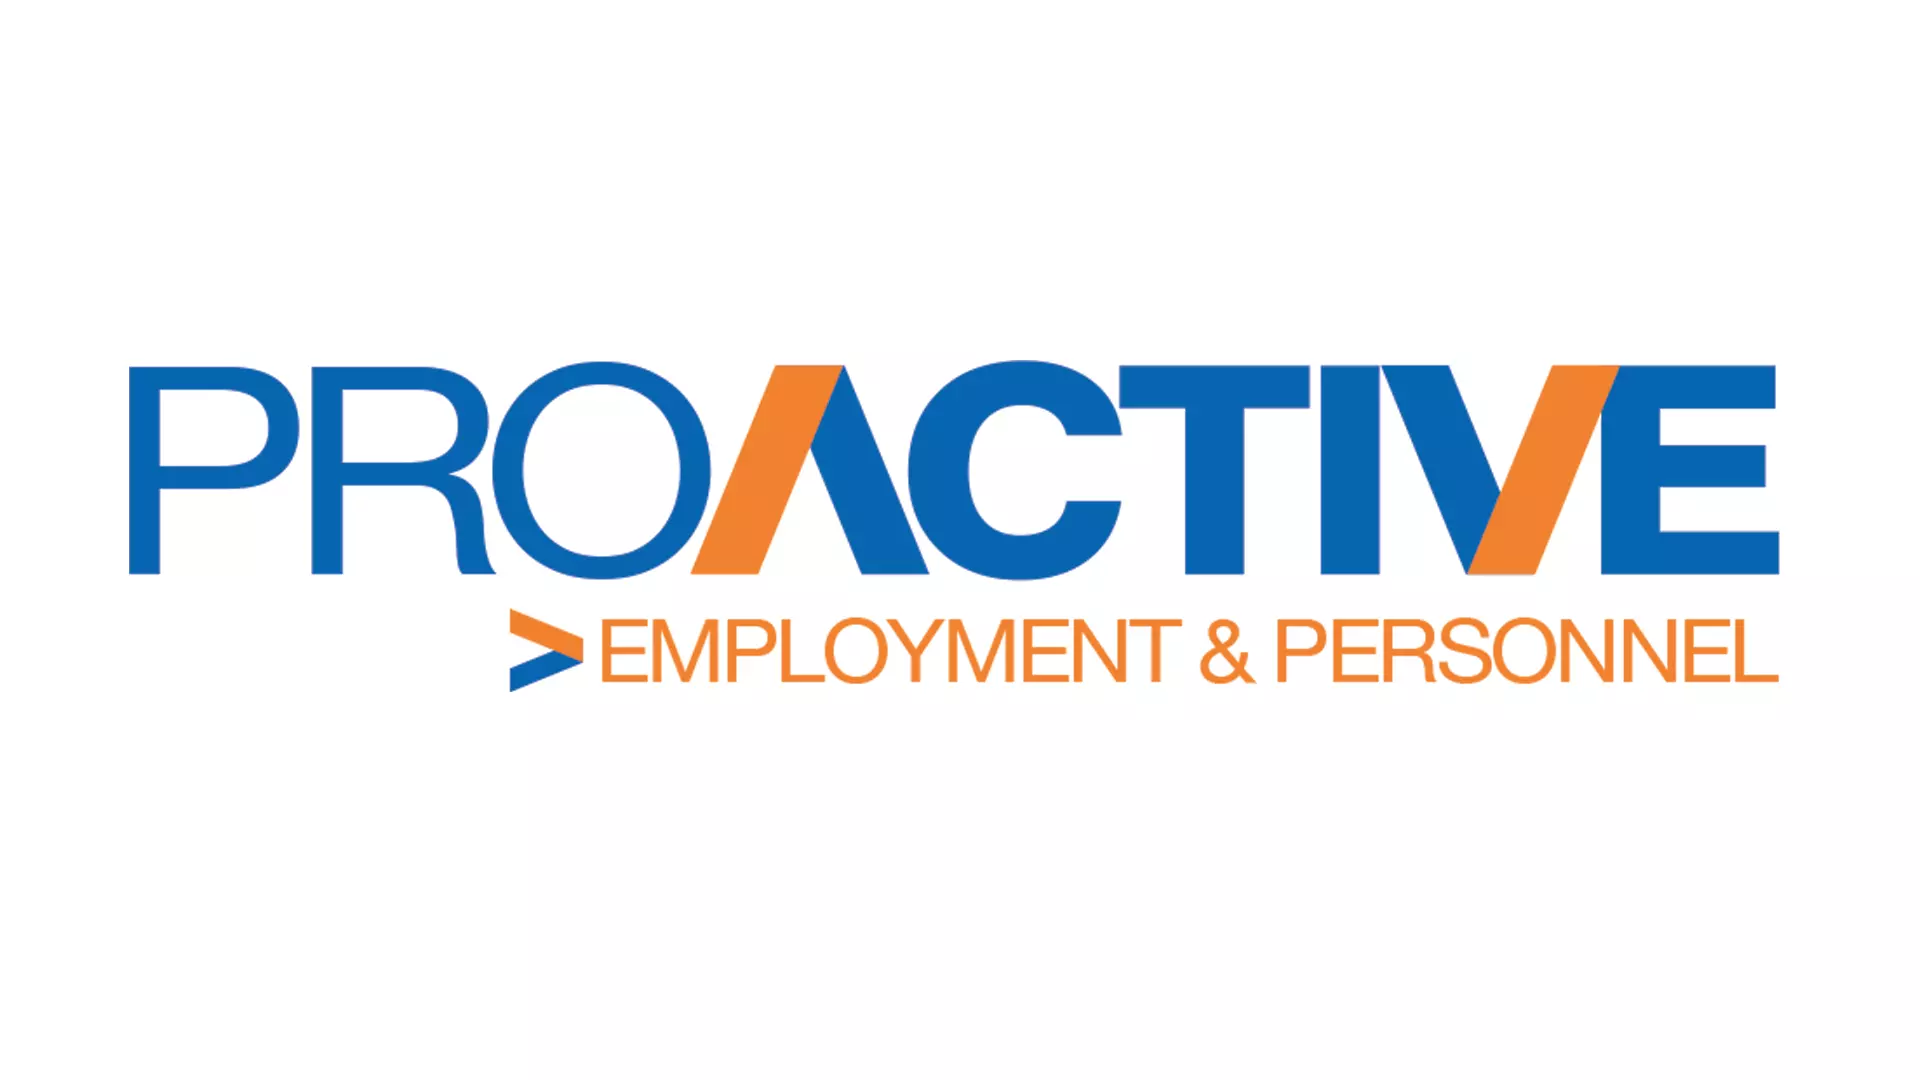 Proactive Employment Brand Identity